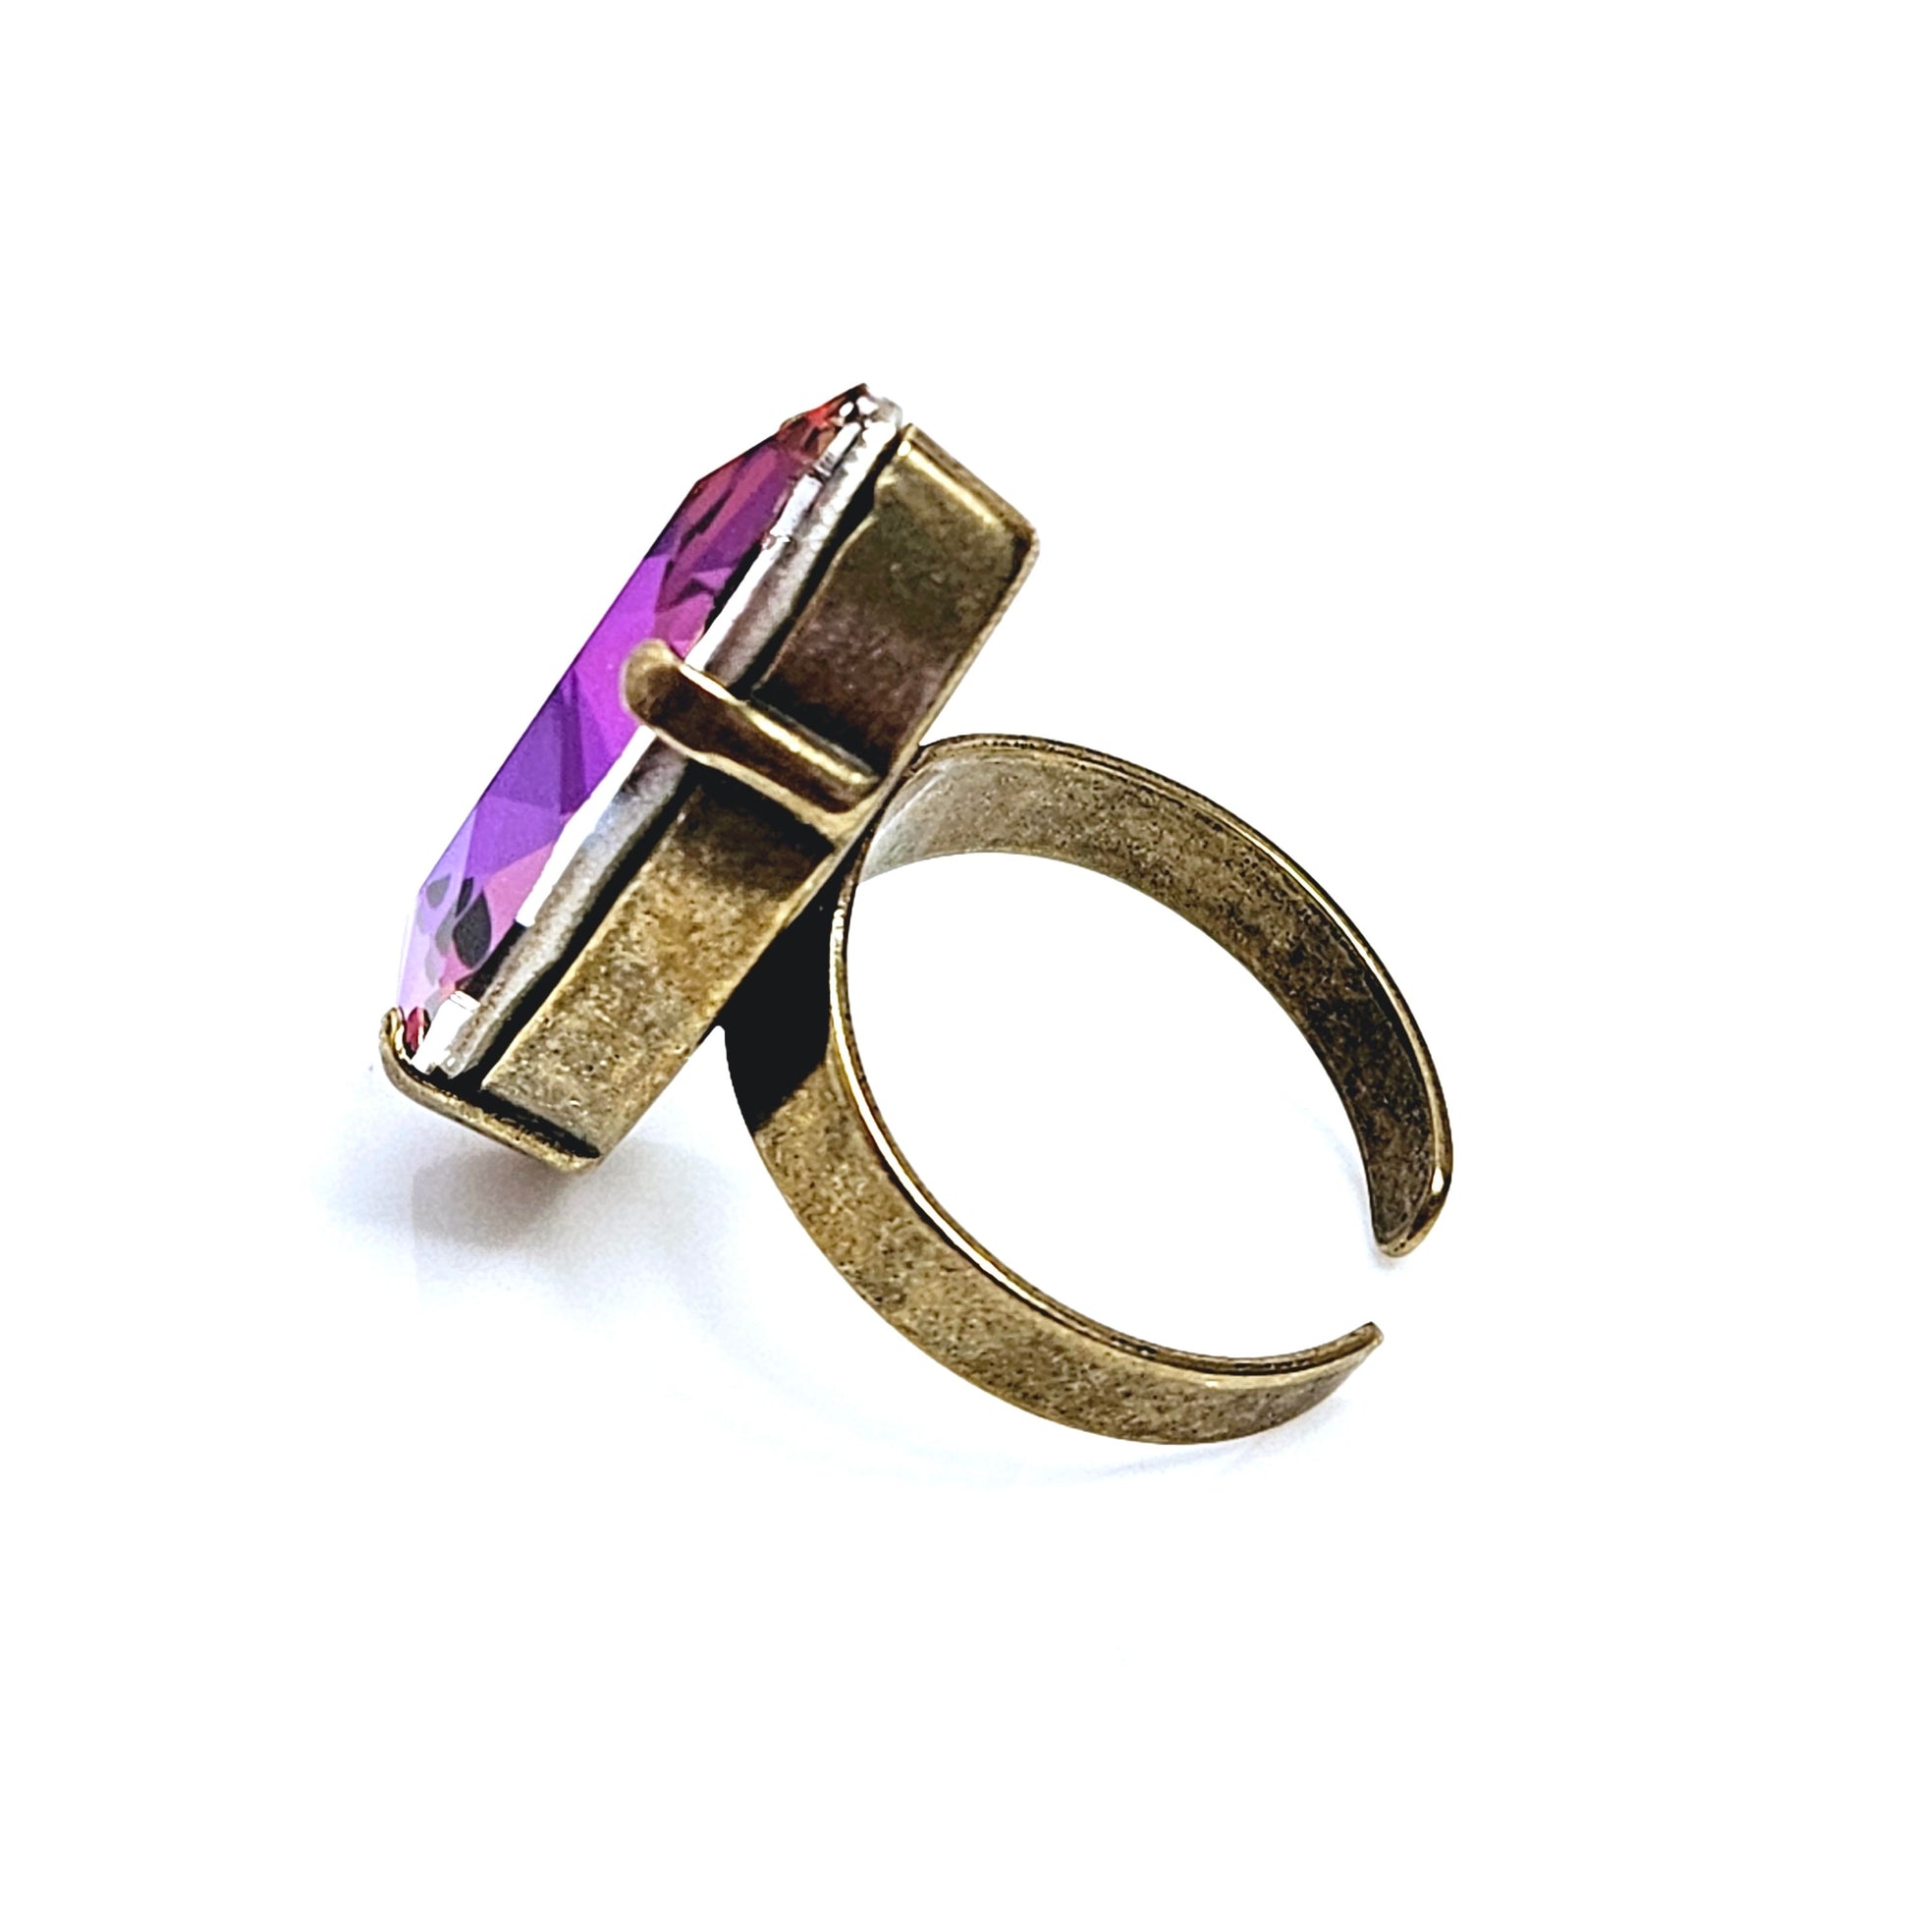 Large Violet Blue Crystal Ring, Large Purple Blue Statement Ring, Antique Brass, Georgian Collet, Vintage Style, Rings For Women, Dark Red Navette